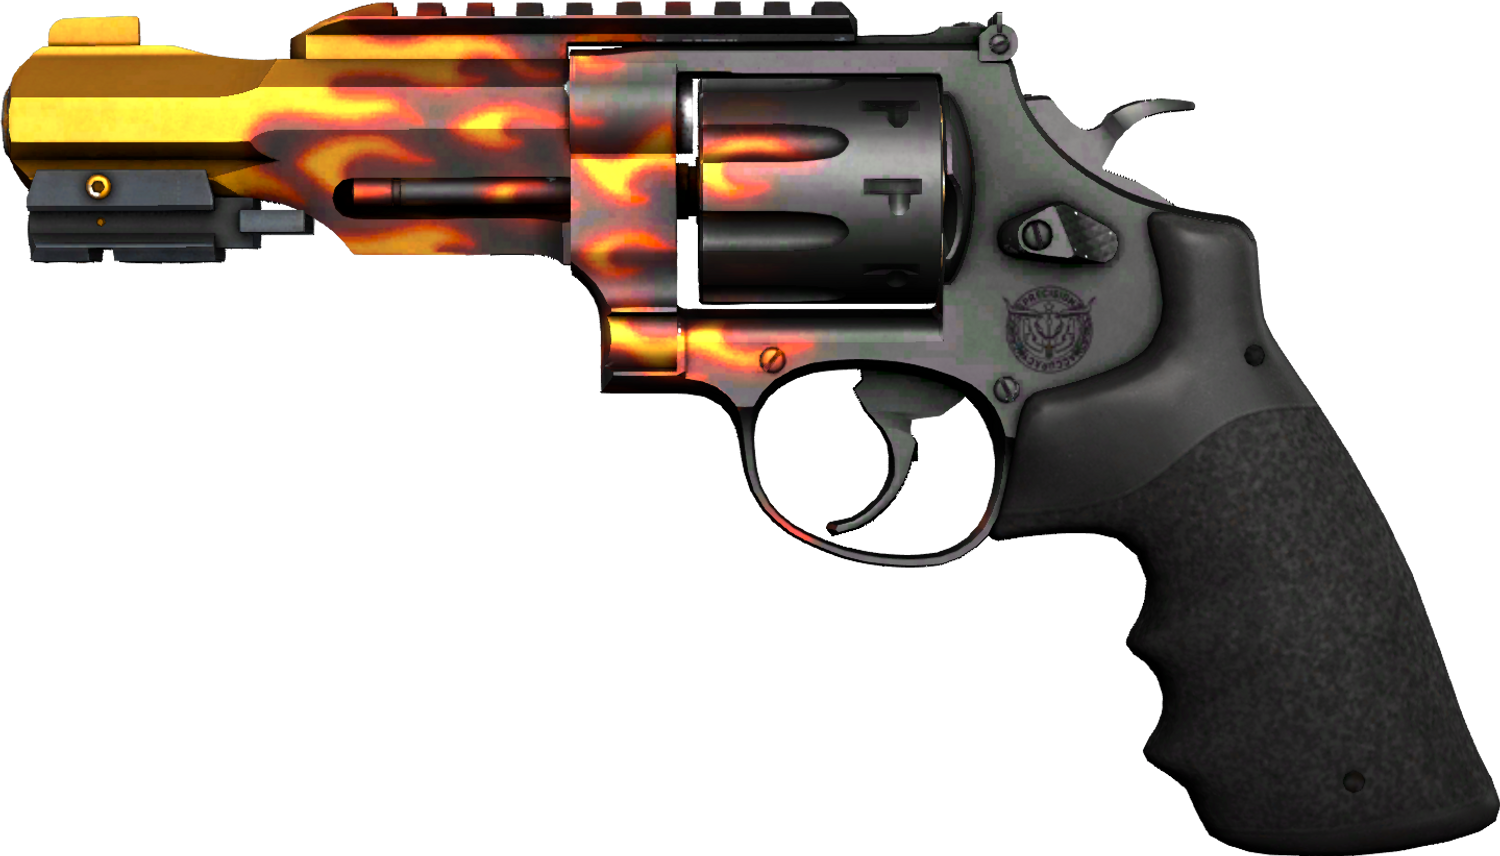 Junkyard Revolver cs go skin for mac download free